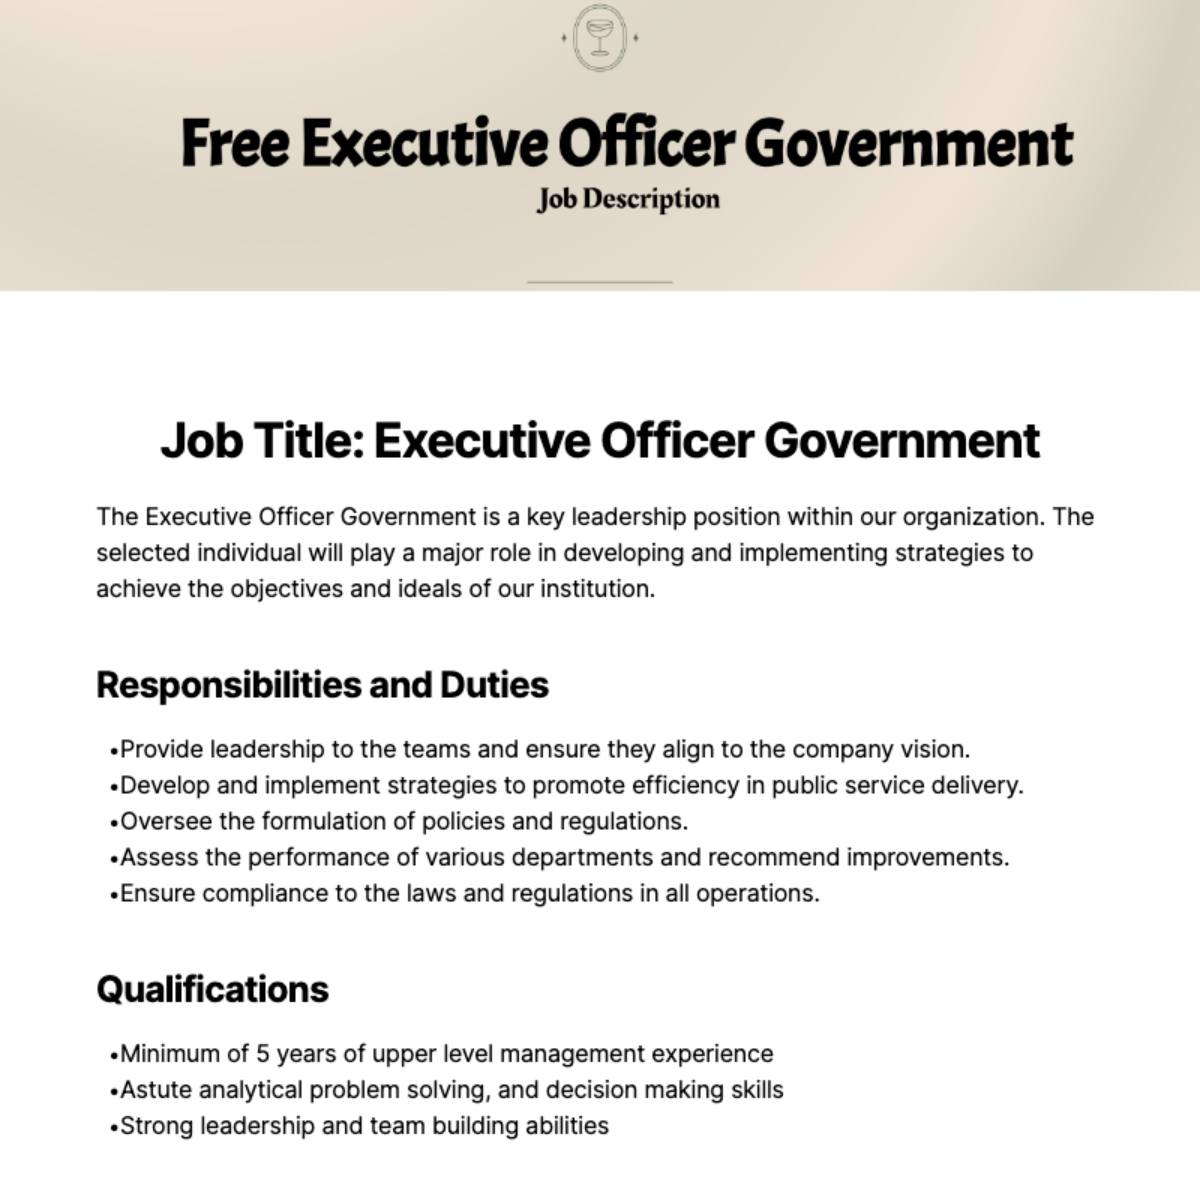 Free Executive Officer Government Job Description Template